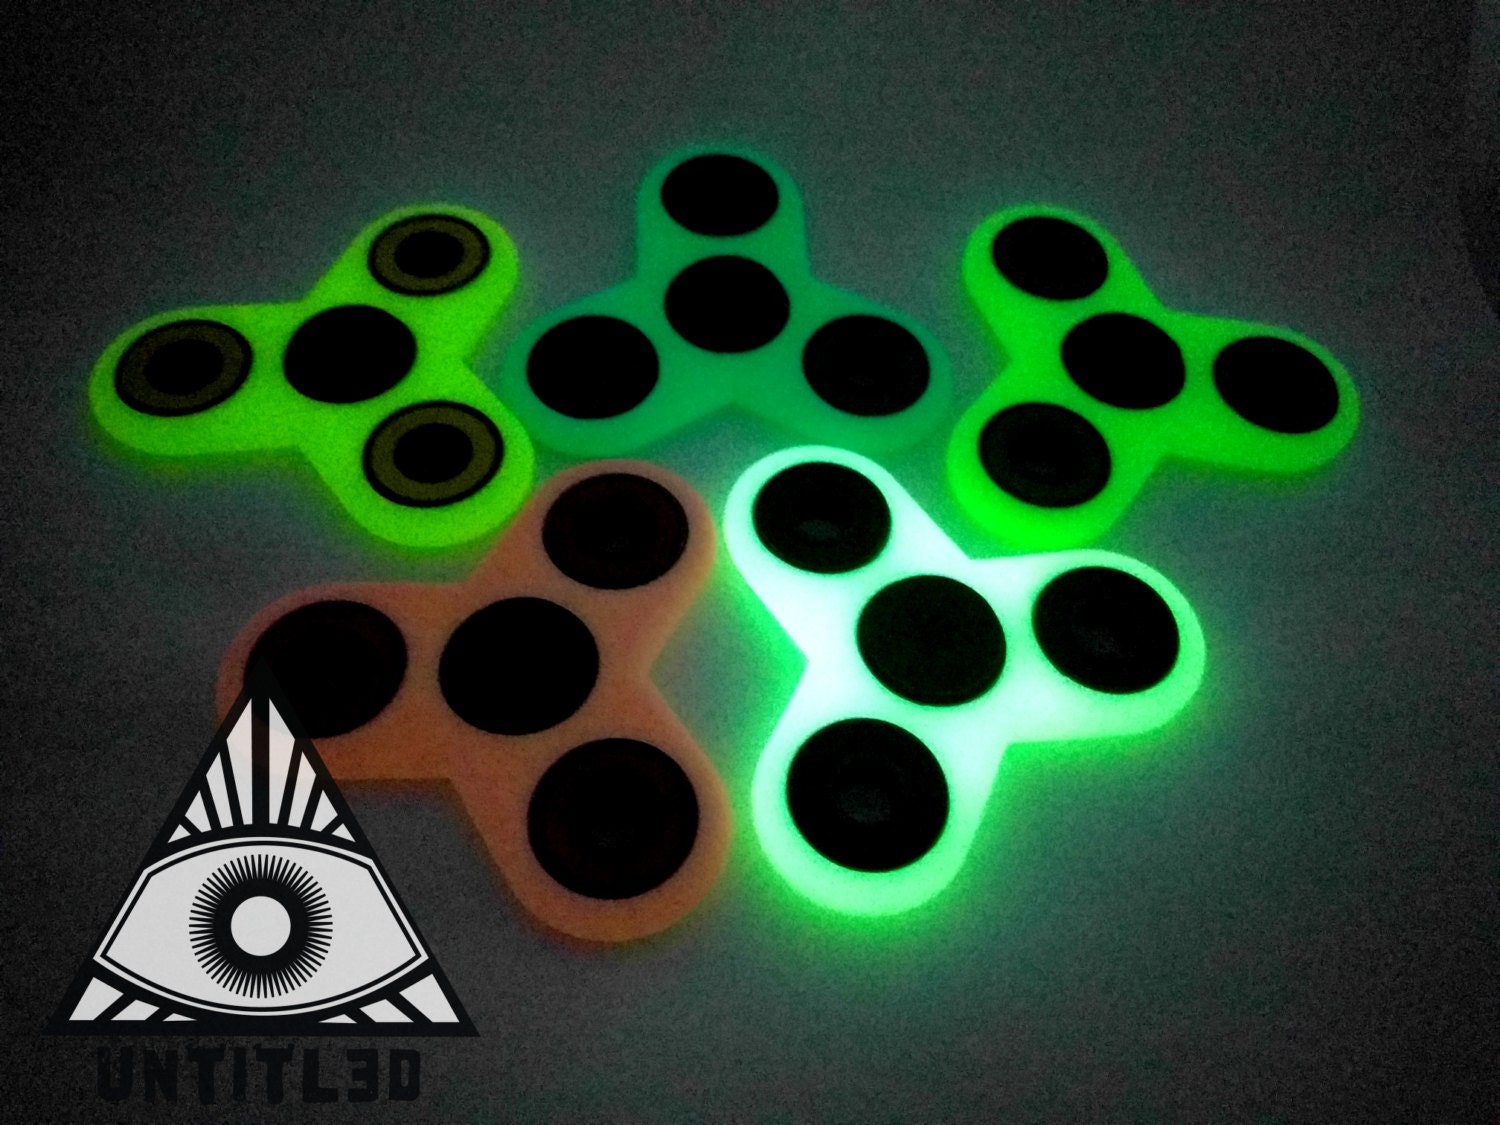 EDC Glow in the Dark Fidget Spinner Tri Multiple Colors